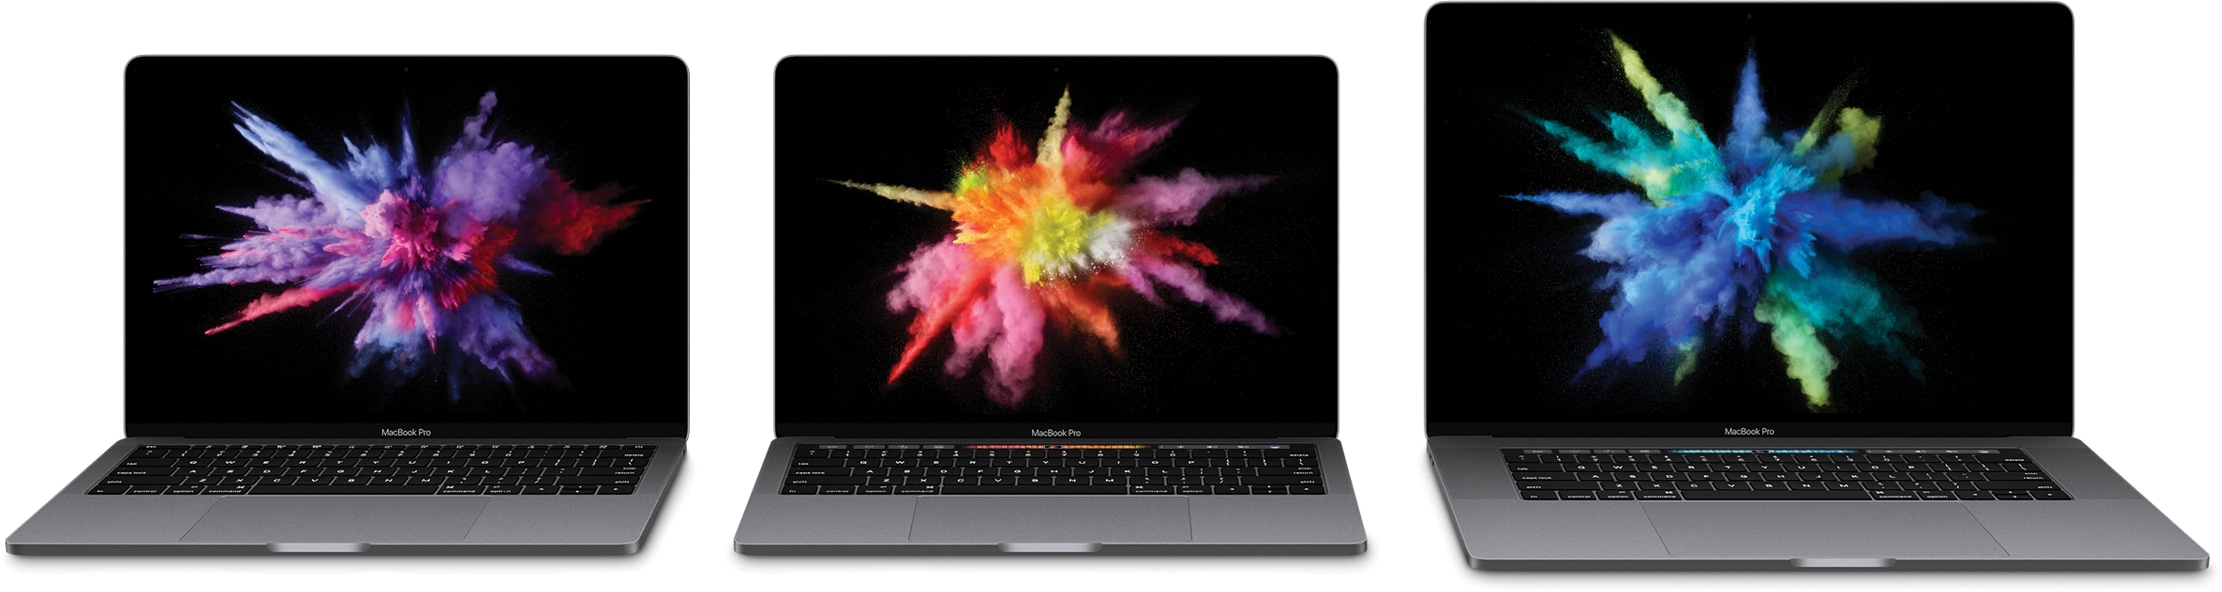 New complete line of MacBooks Pro